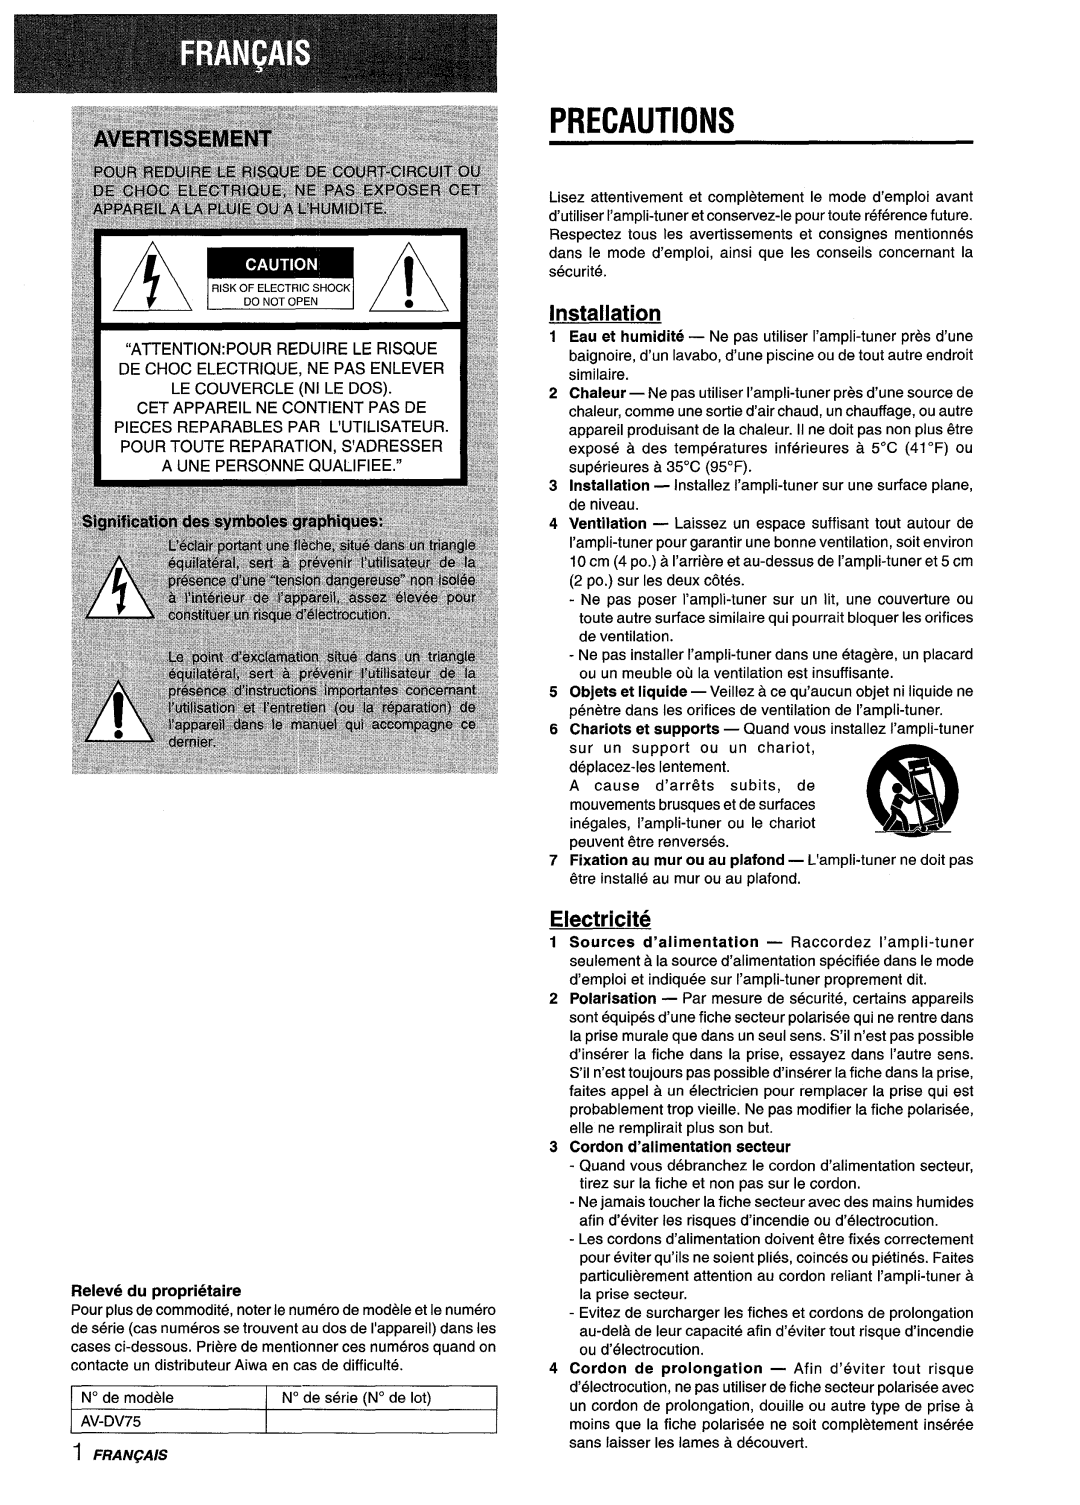 Sony AV-DV75 manual Precautions, Electricity, Releve du proprietaire, Cordon d’alimentation secteur, Installation 